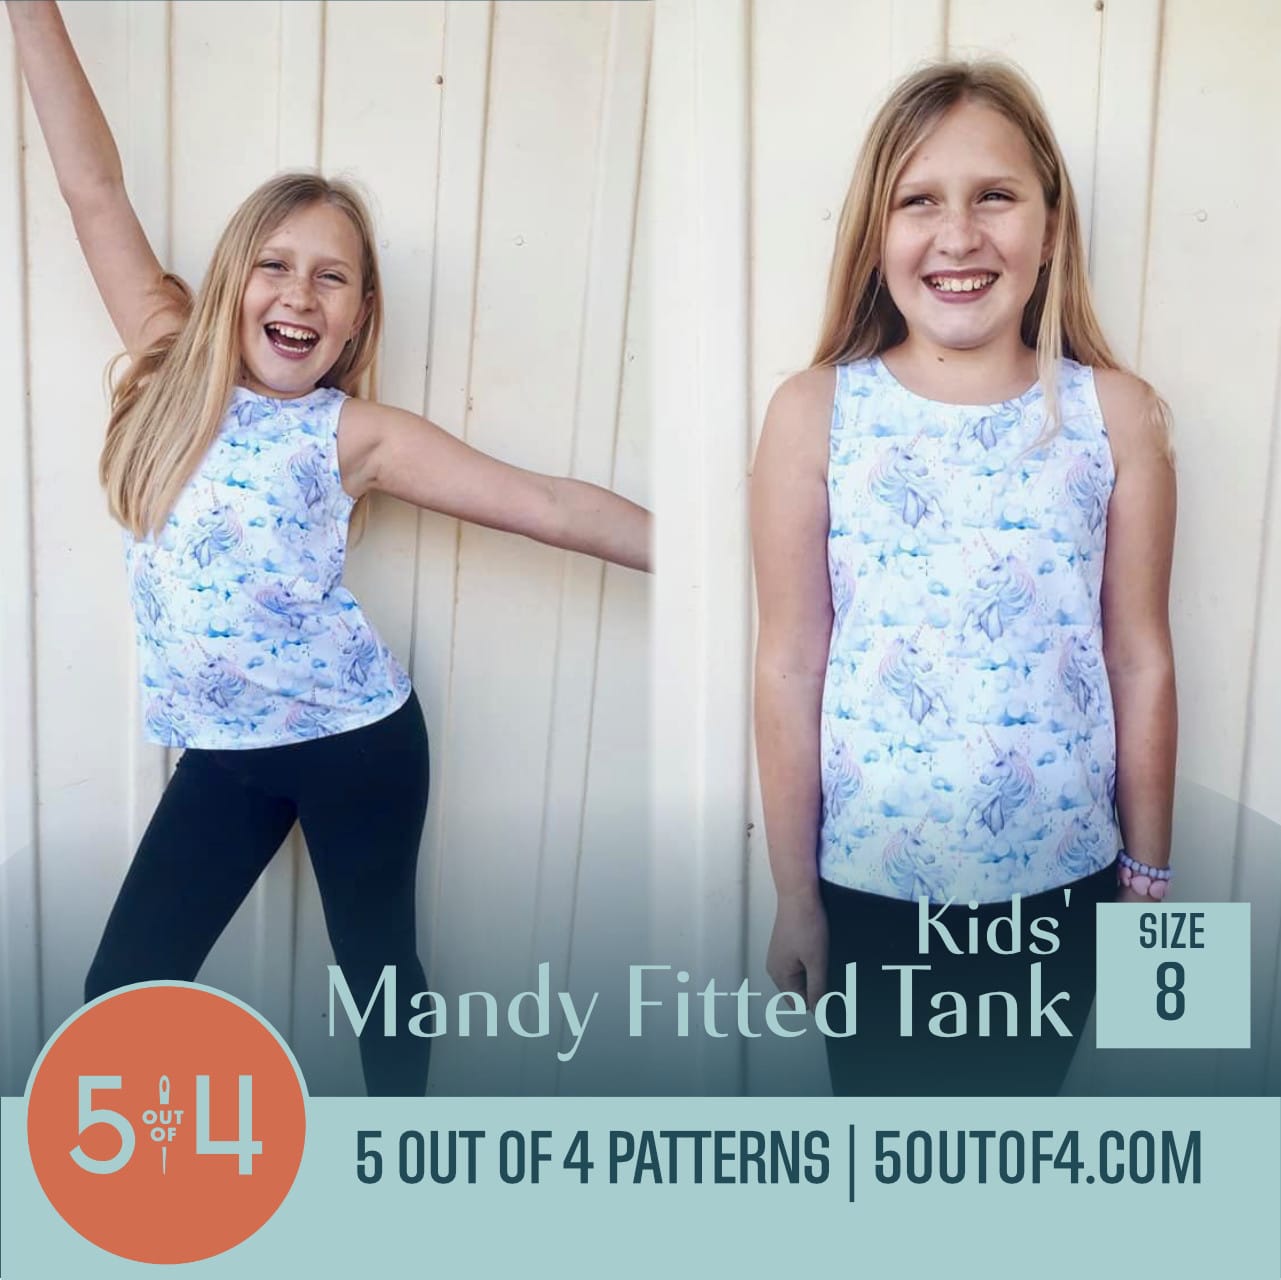 https://5outof4.com/wp-content/uploads/2019/08/Kids-Mandy-Fitted-Tank-8.jpg